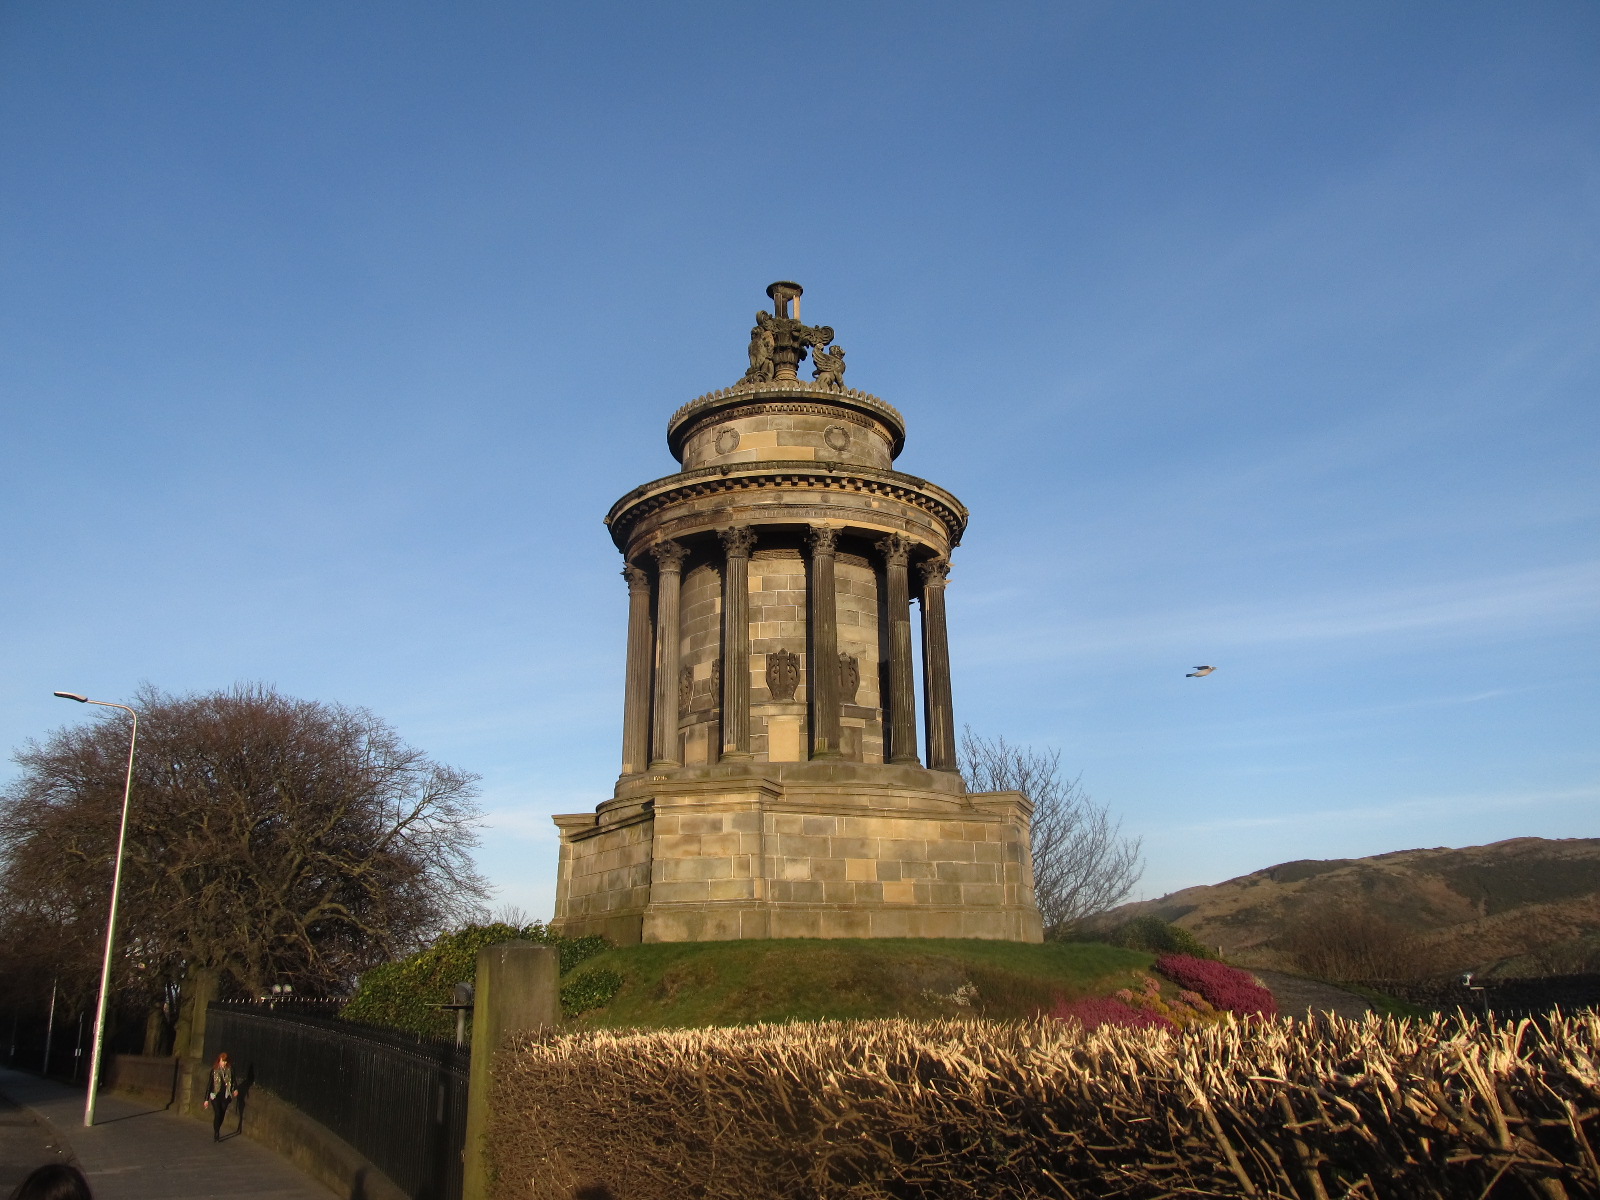 The Dugald Steward Monument in Edinburgh